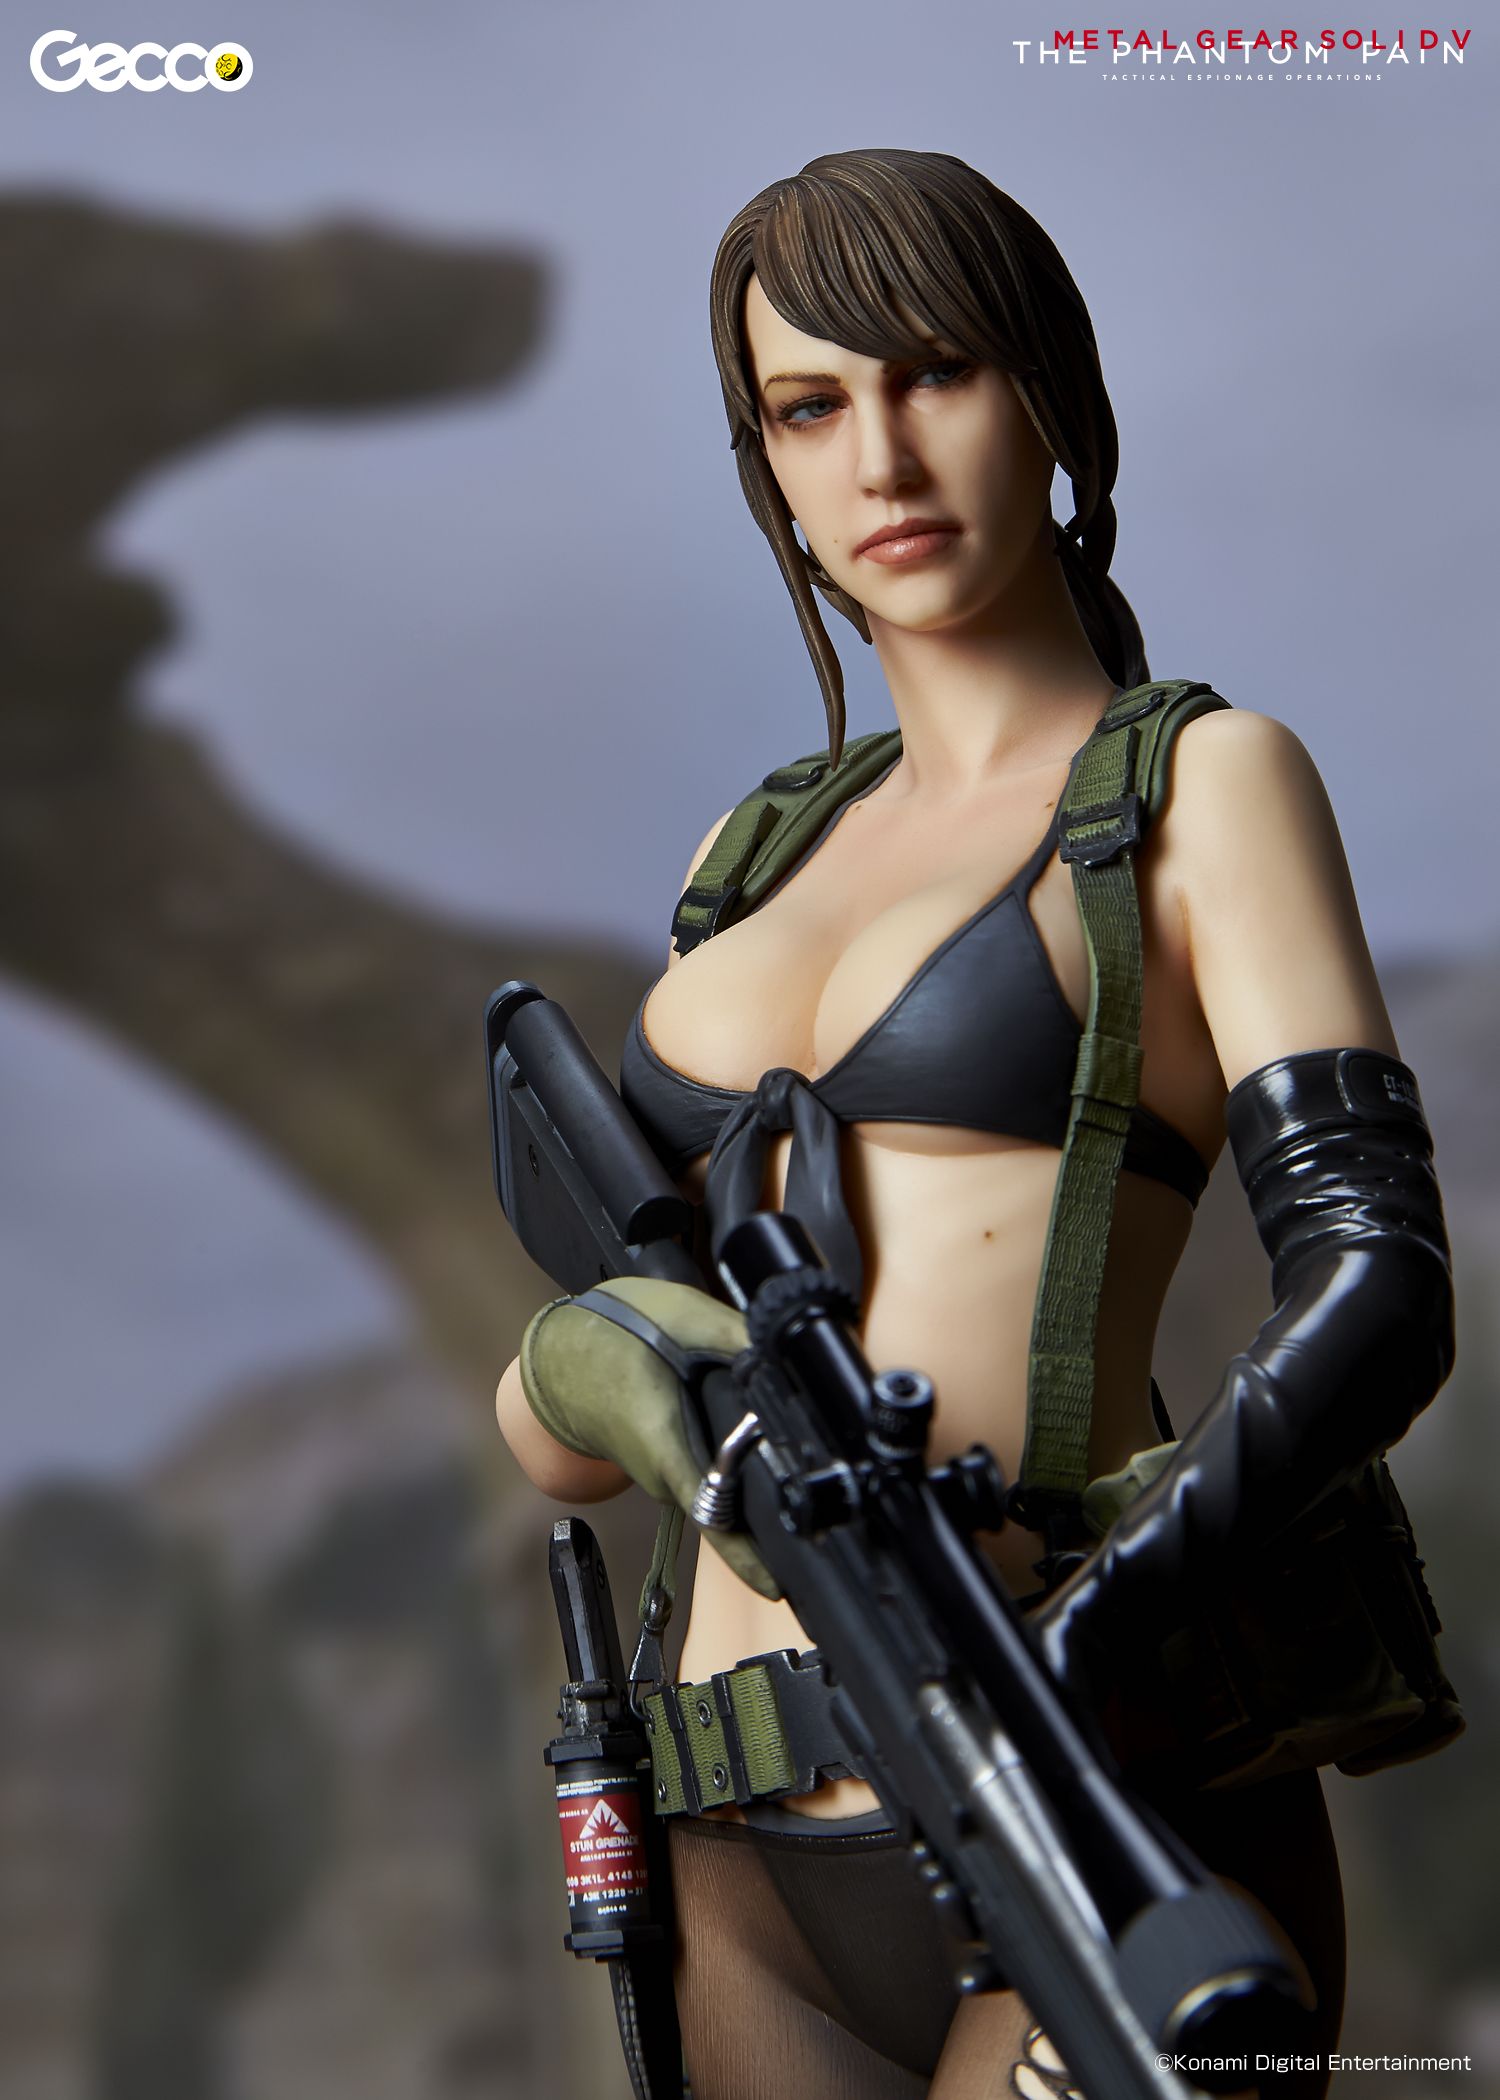 Quiet Statue Metal Gear Solid V 04 Gamempire It